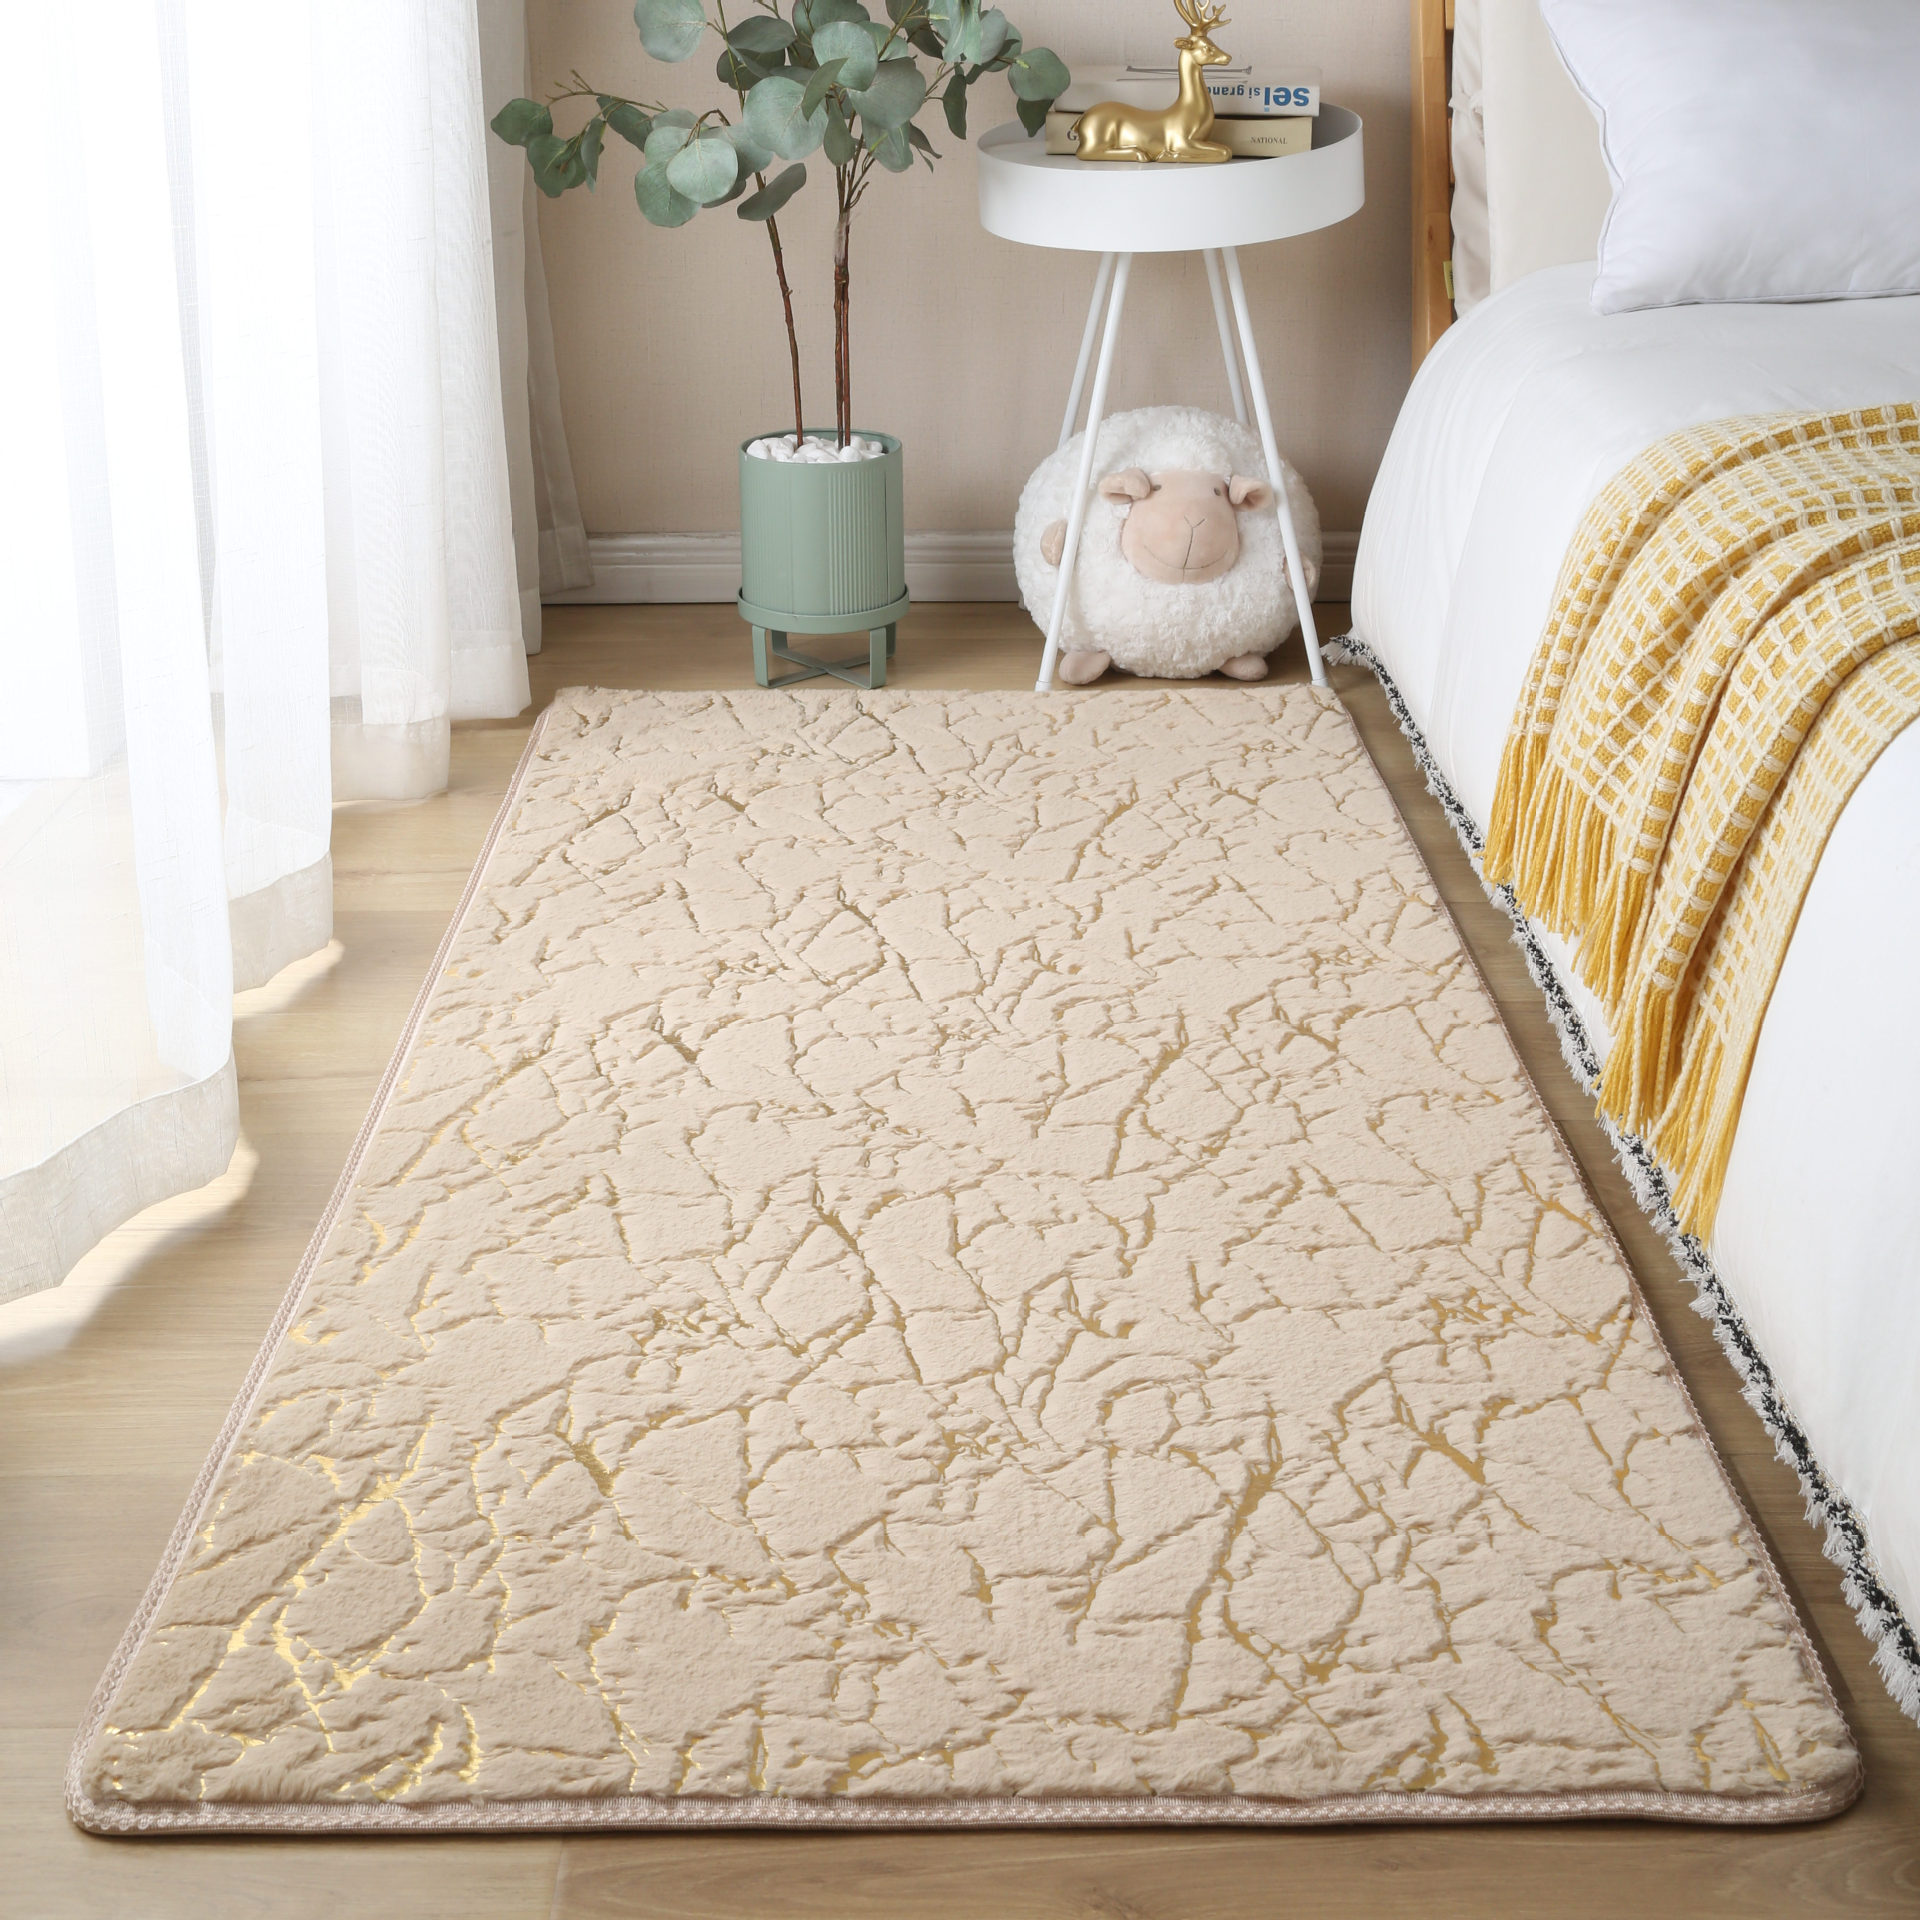 Creative and Slightly Luxury Imitation Rabbit Fur Gilding Carpet Home Bedside Full-Covered Bayeta Washable Rectangular Carpet Floor Mat